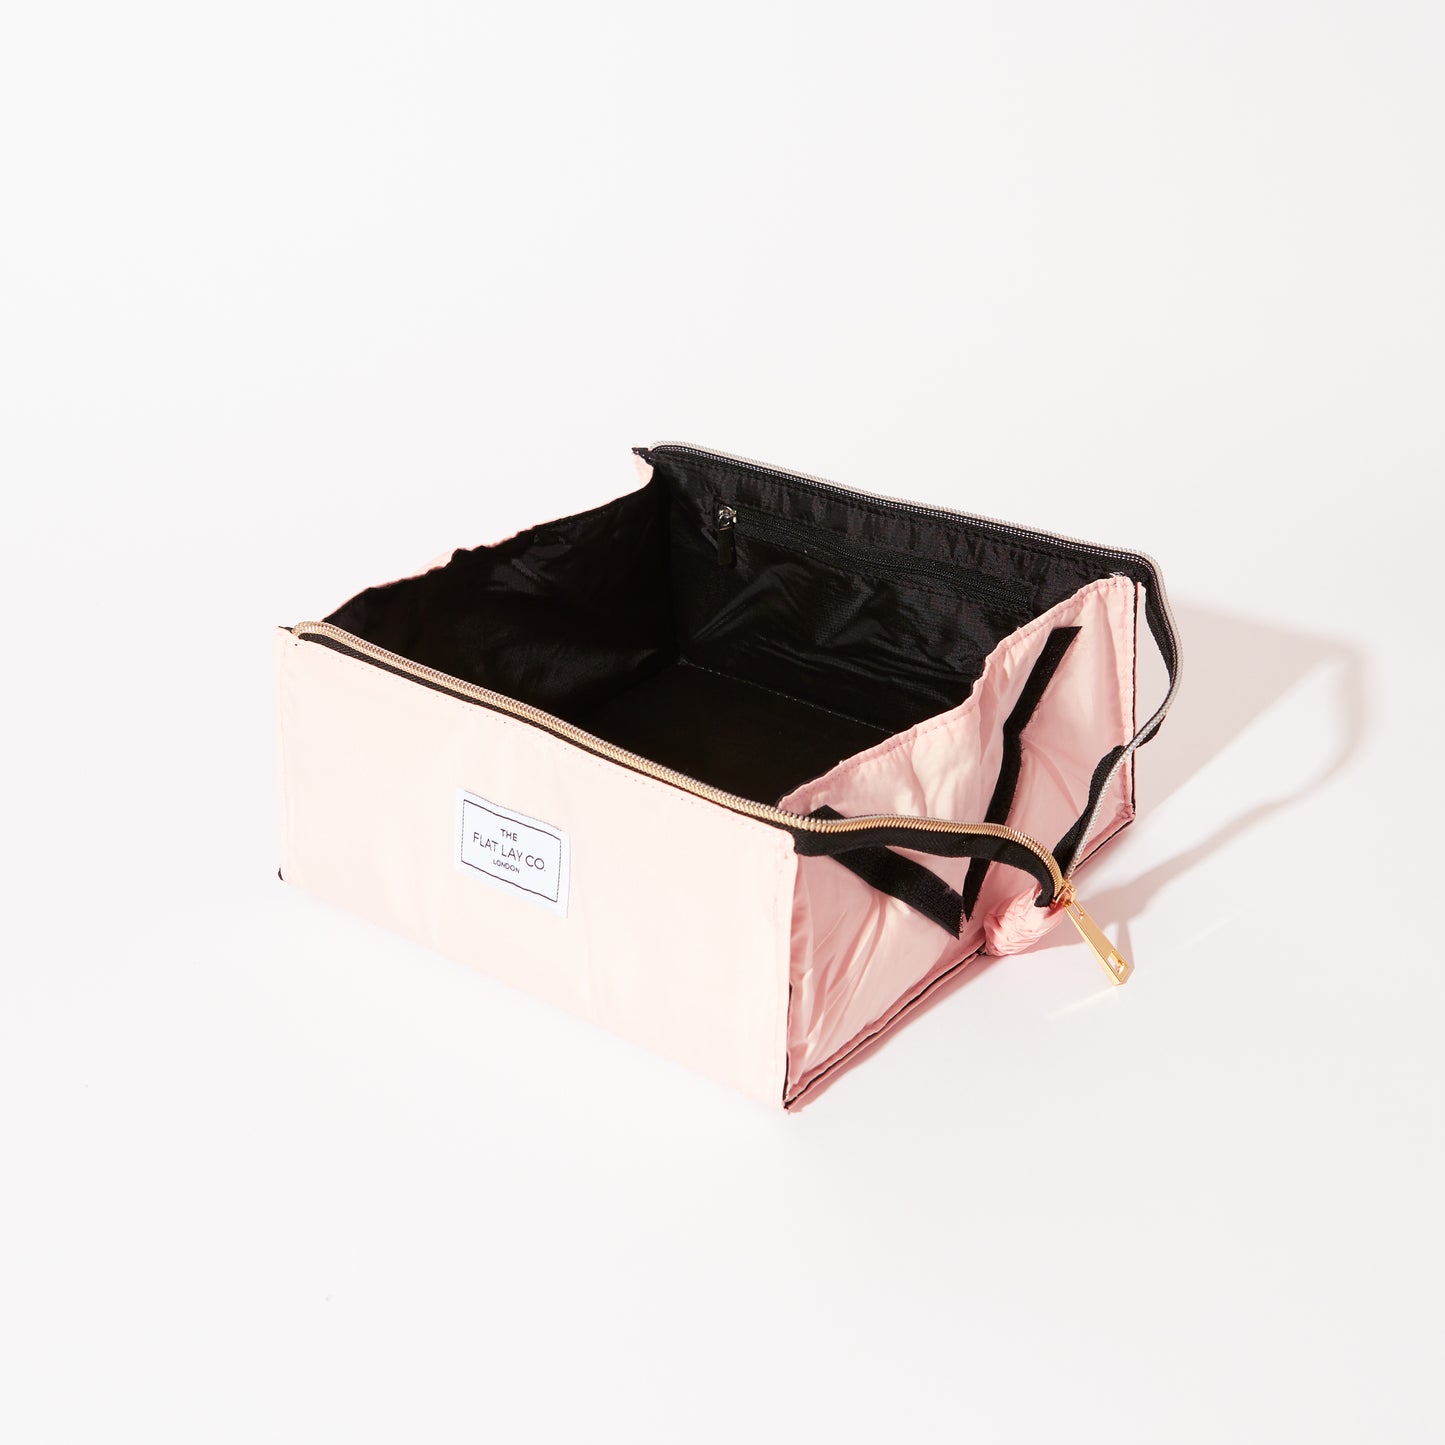 Blush Pink Open Flat Makeup Box Bag and Tray